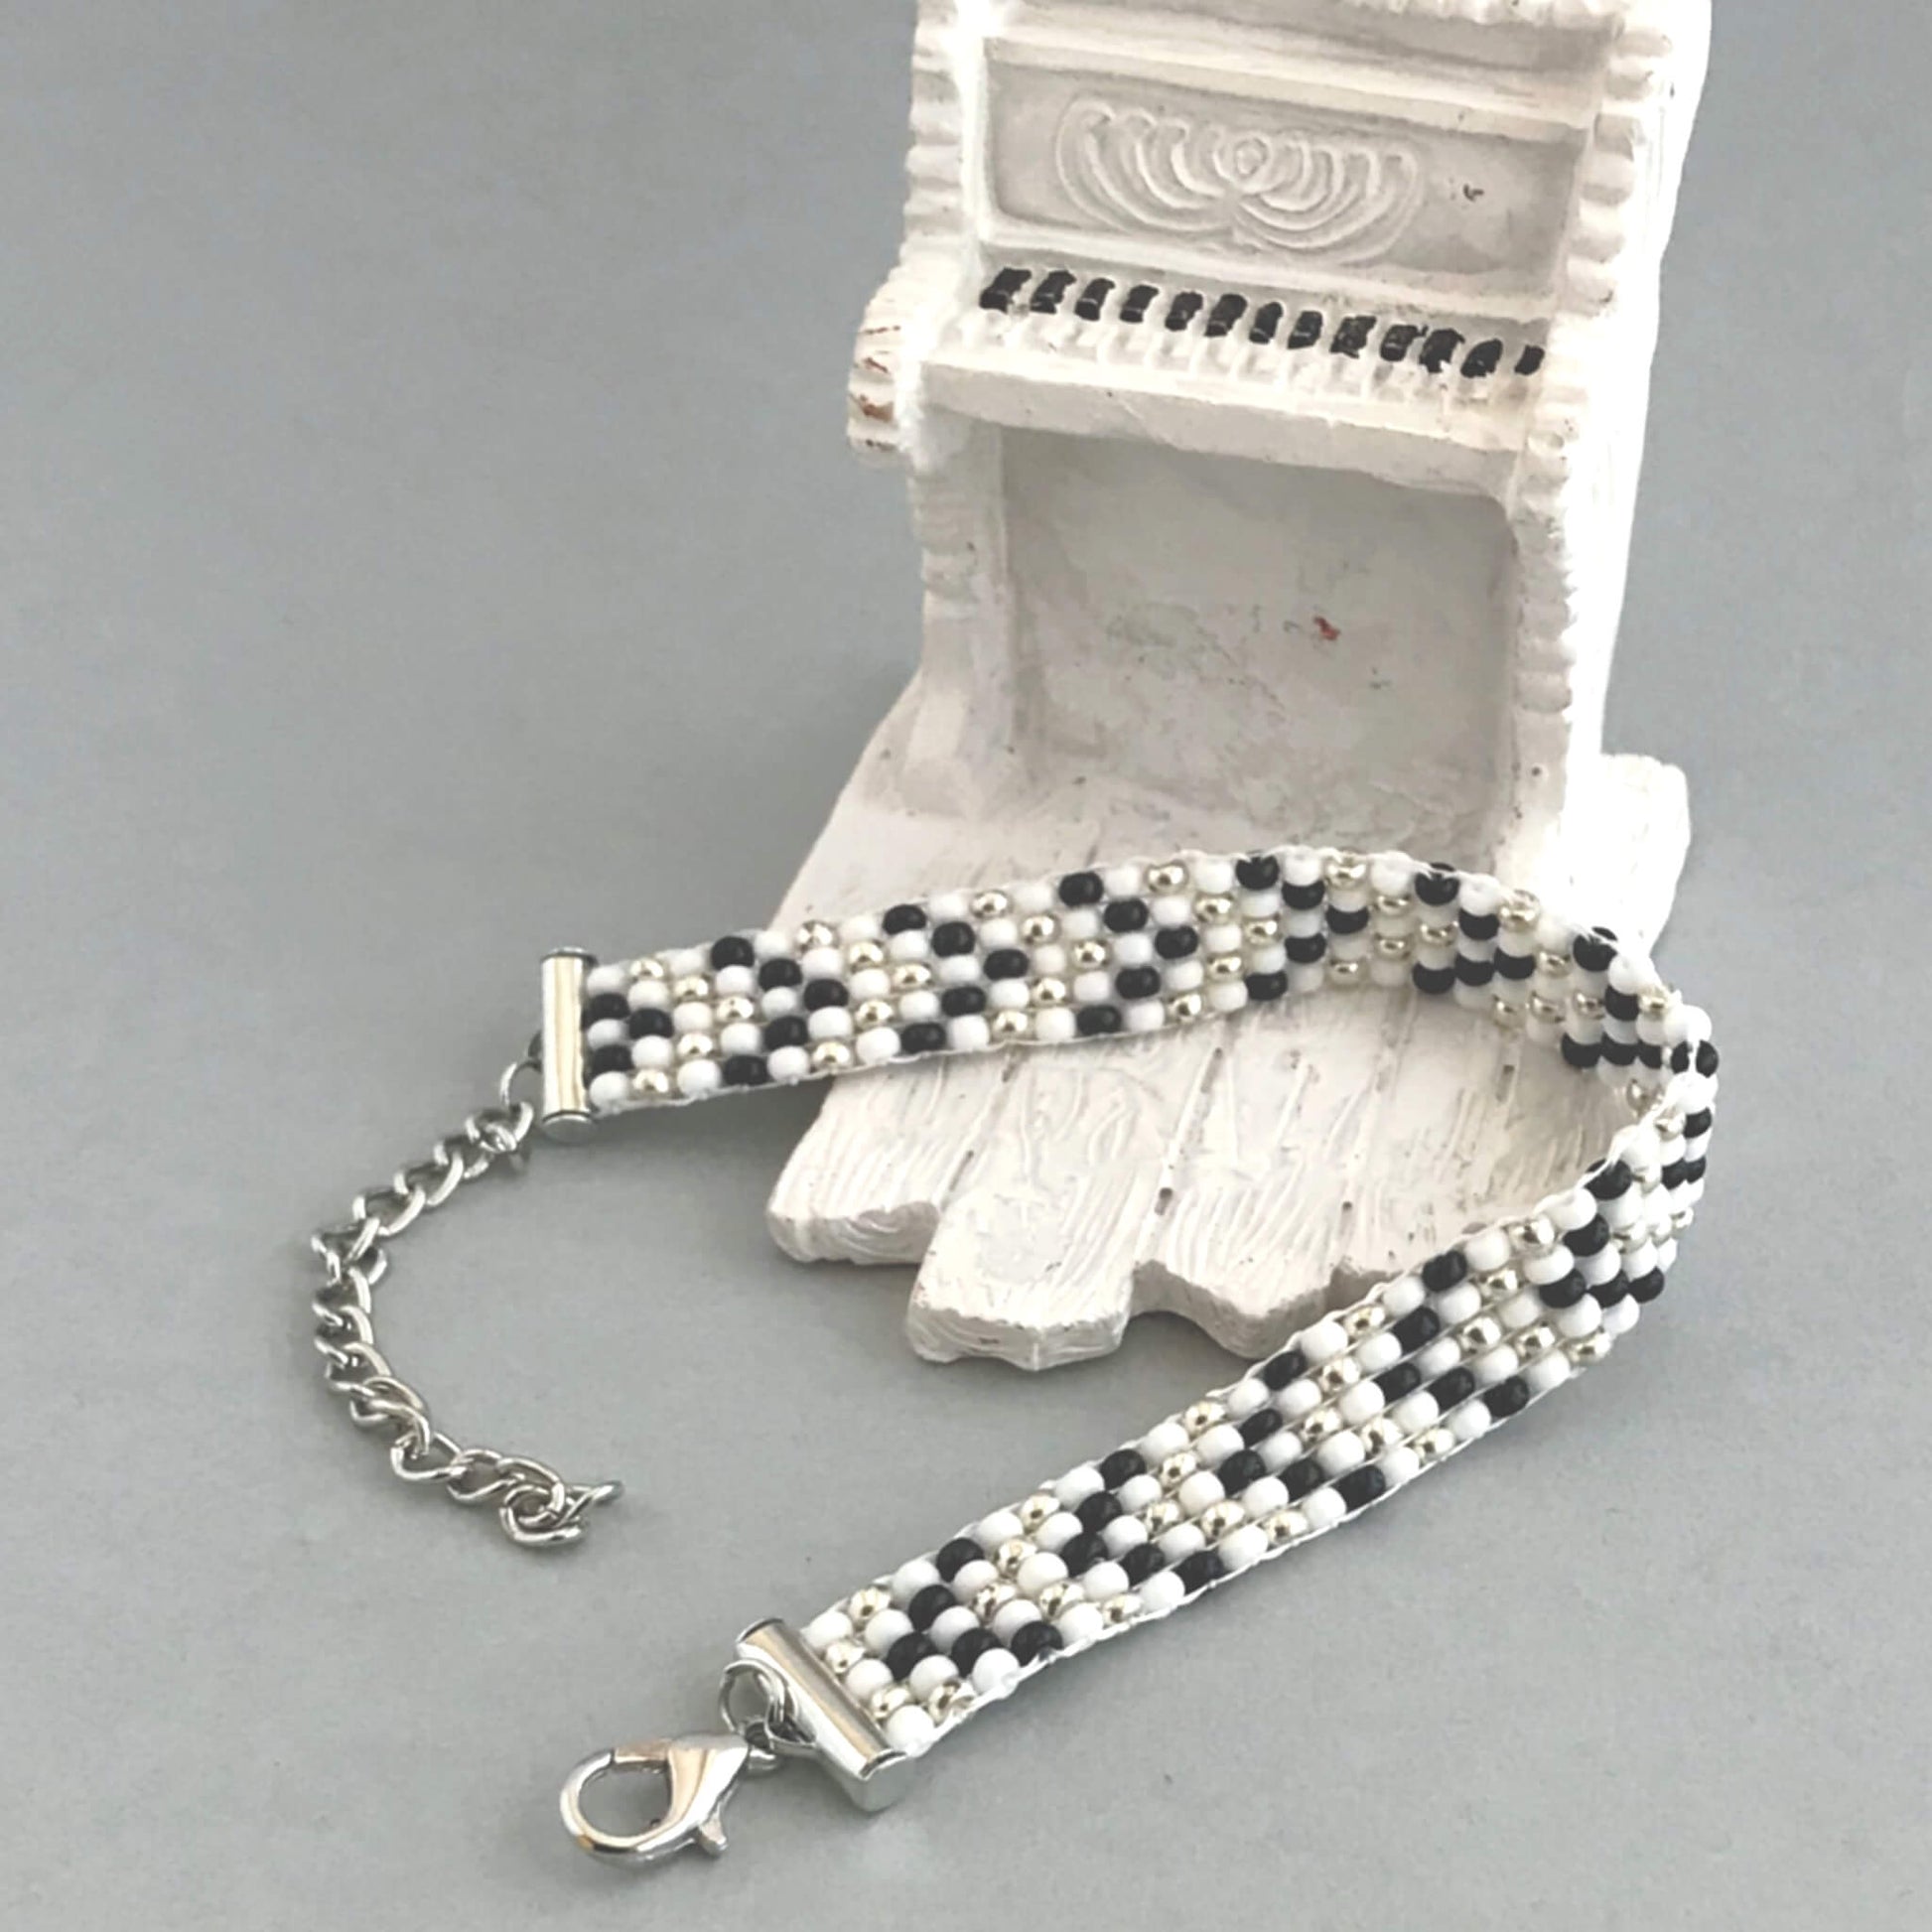 Adjustable Czech Glass Seed Bead Loom Bracelet, Handmade Beaded